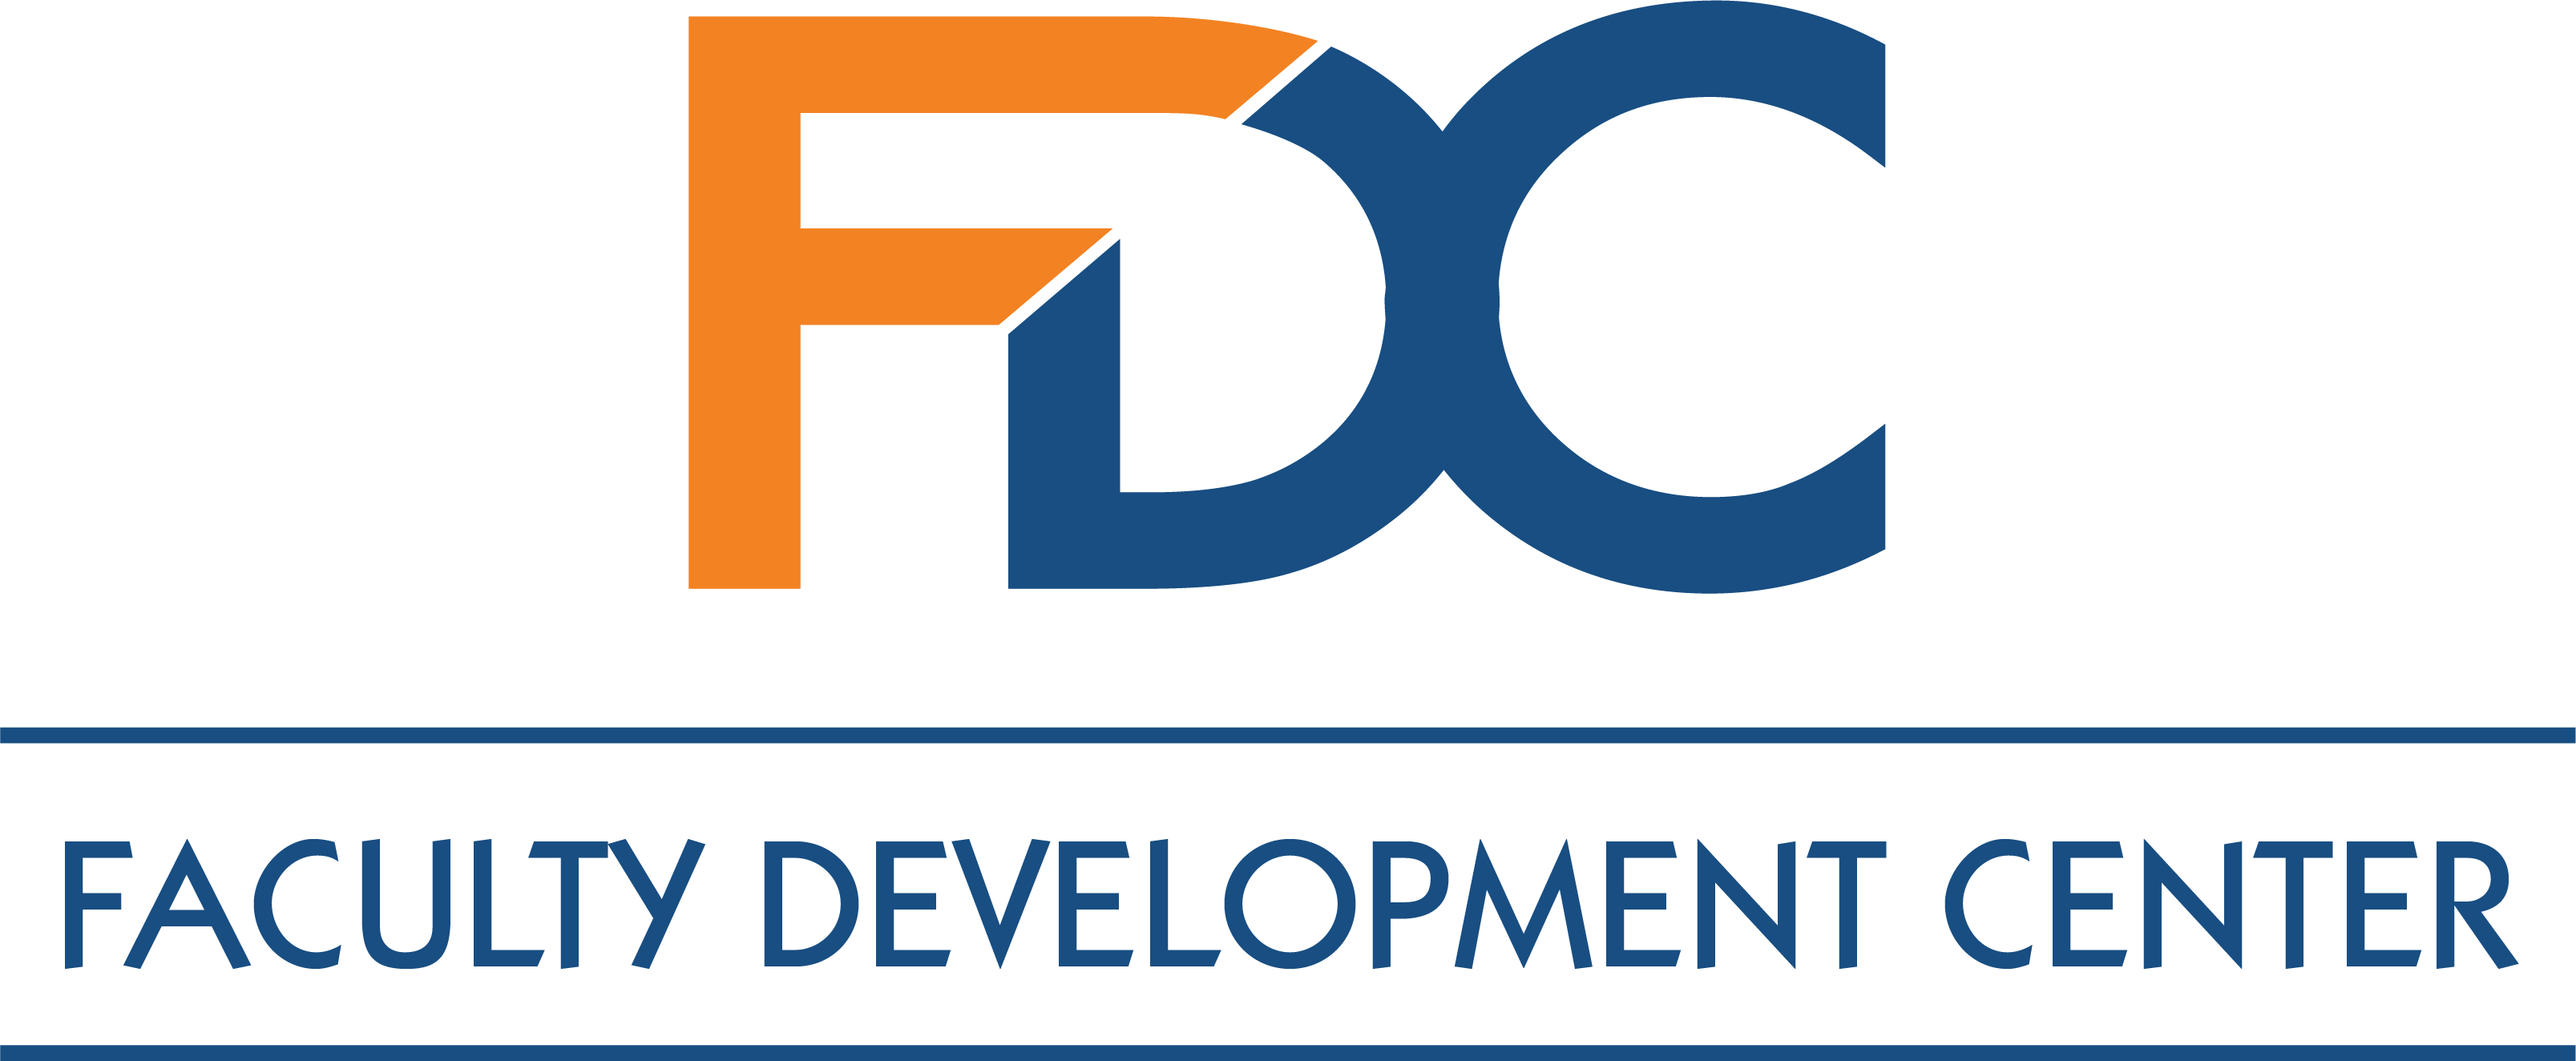 FDC Logo - Faculty Development Center Development Center